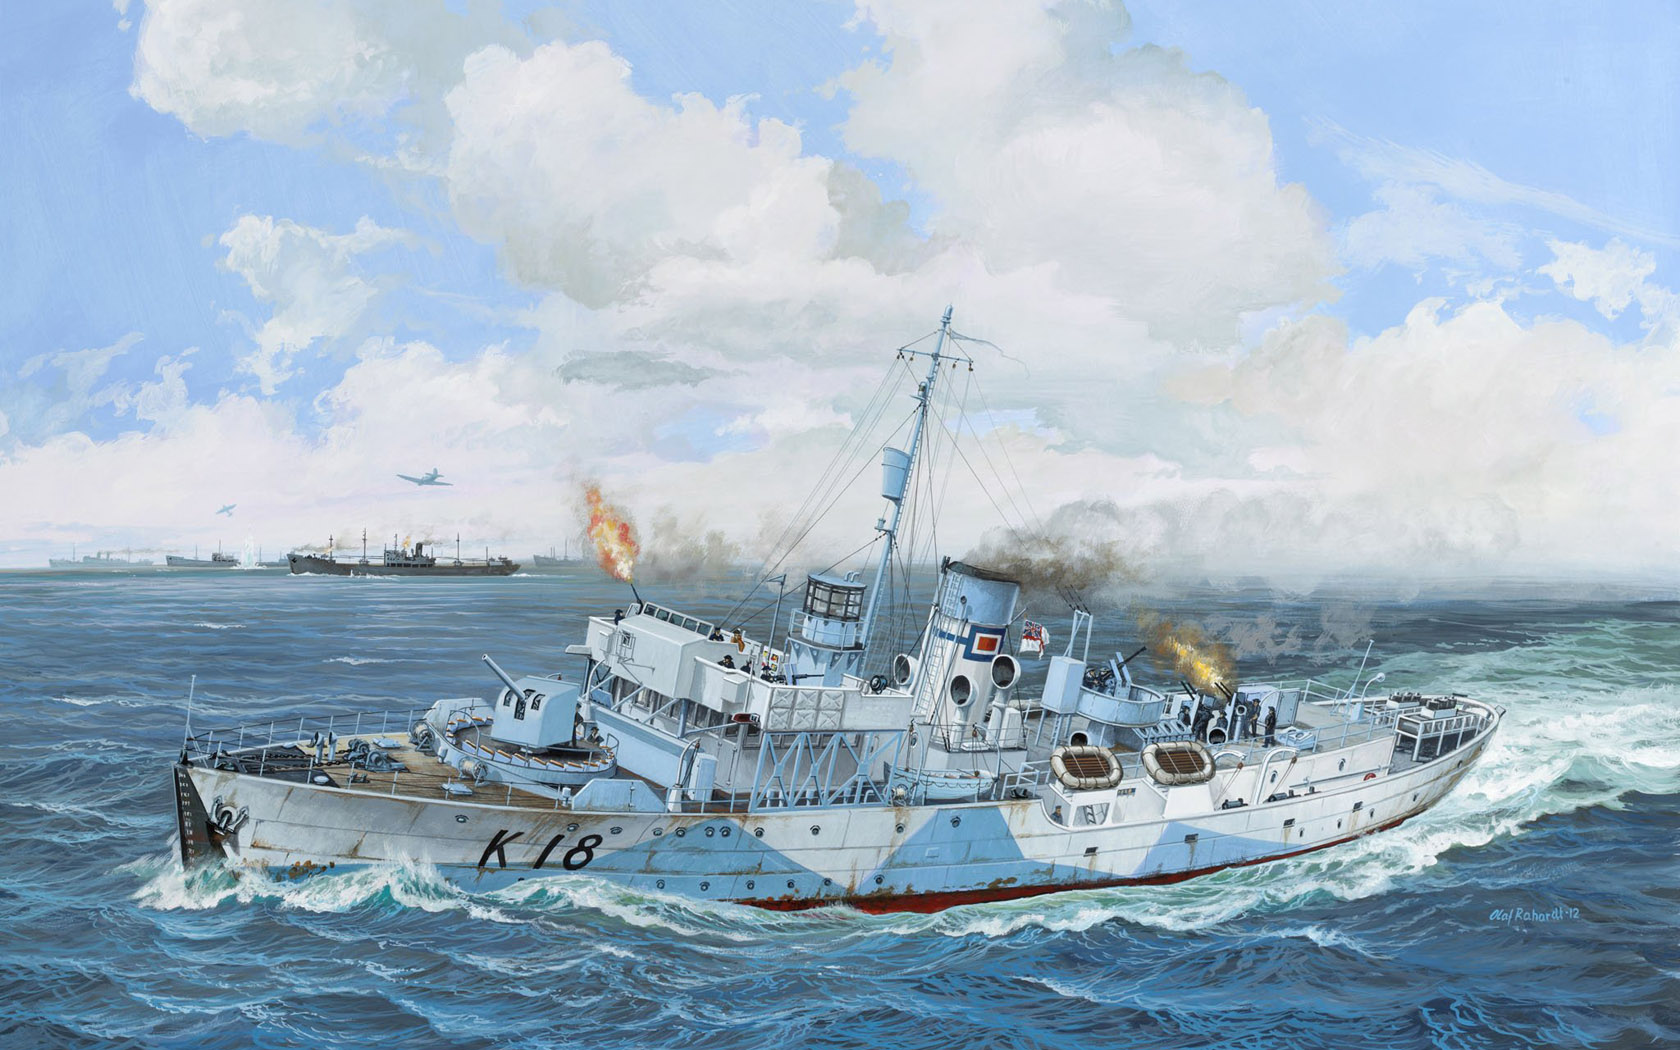 General 1680x1050 warship war sea military military vehicle water waves clouds sky smoke artwork navy Royal Navy signature Olaf Rahardt